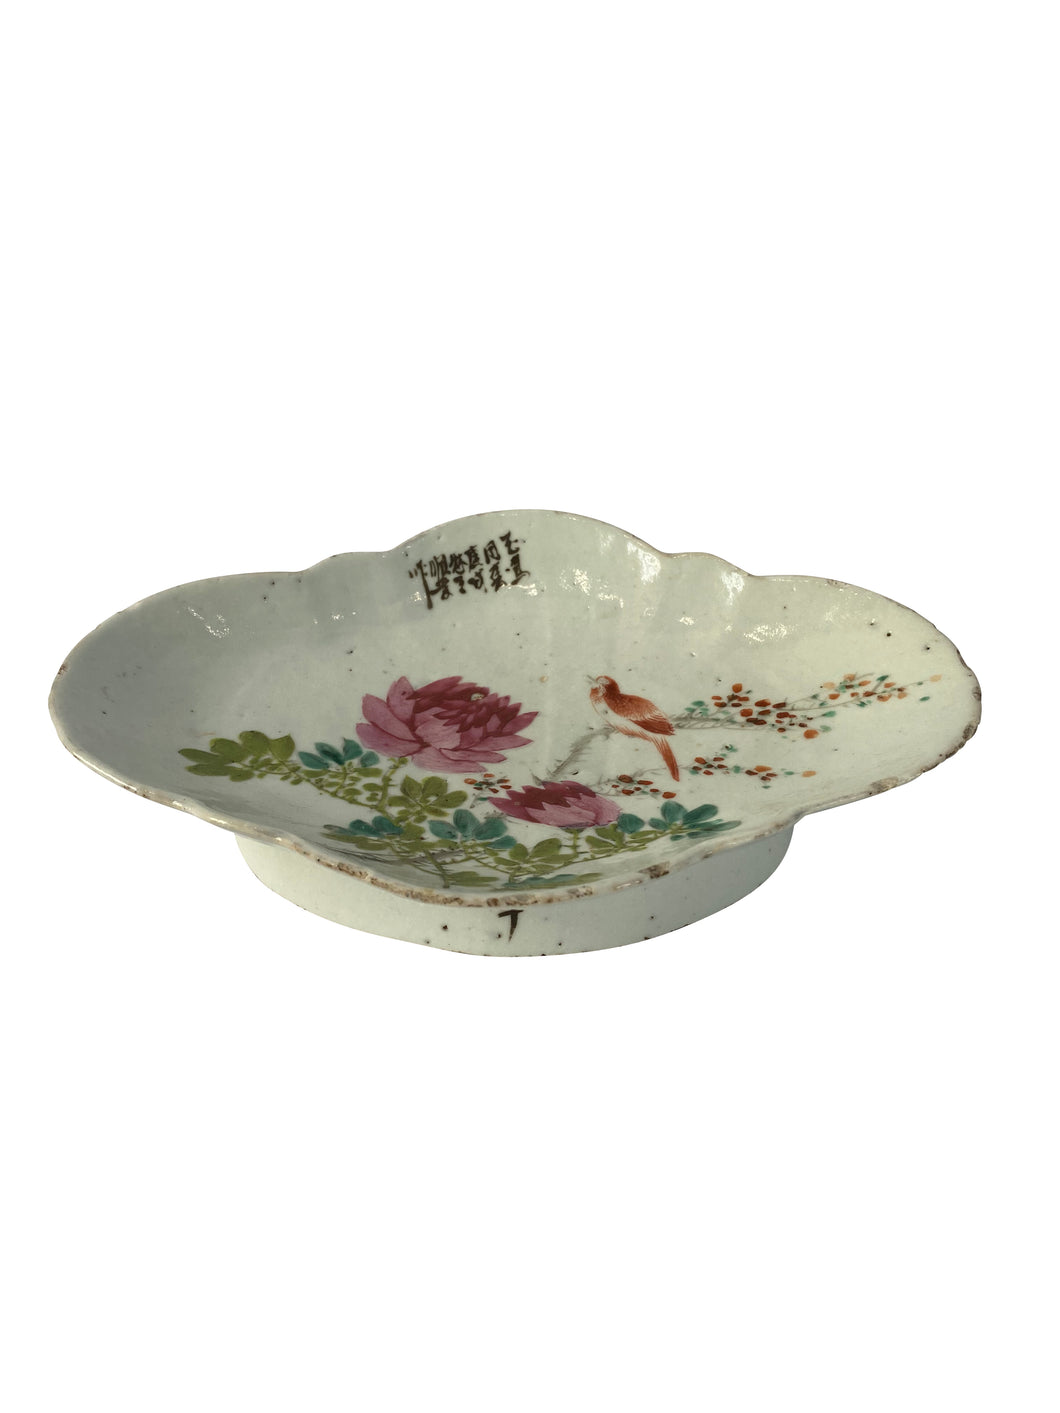 Painted Chinese Trinket Dish